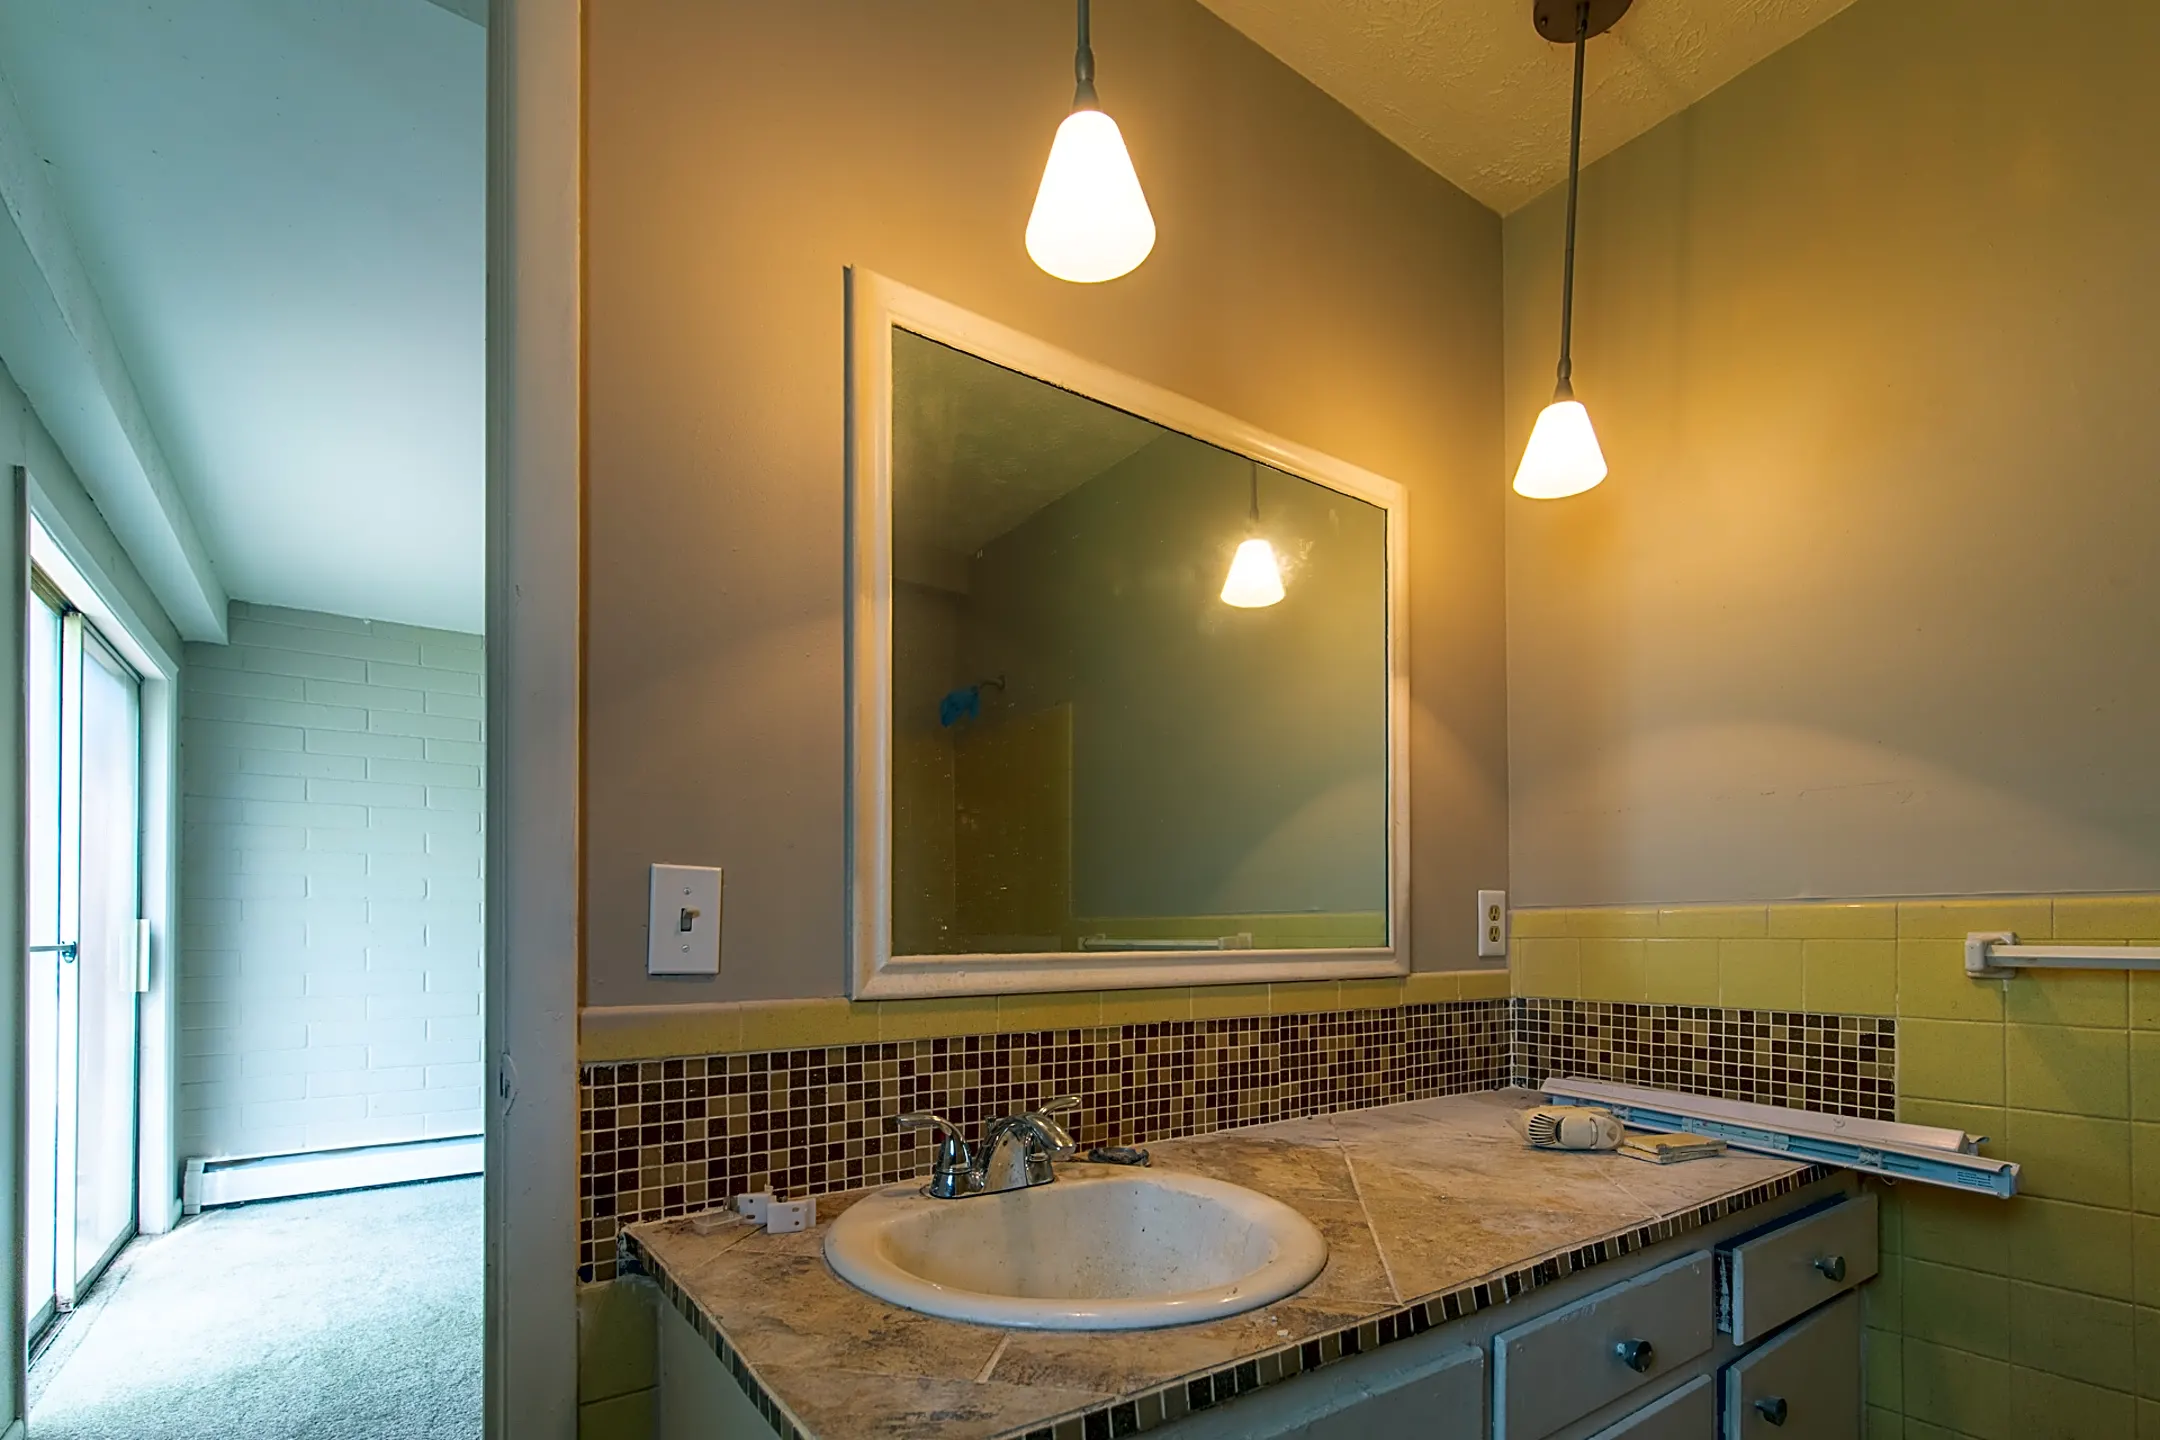 Bathroom - InTempus Property Management - Indianapolis, IN